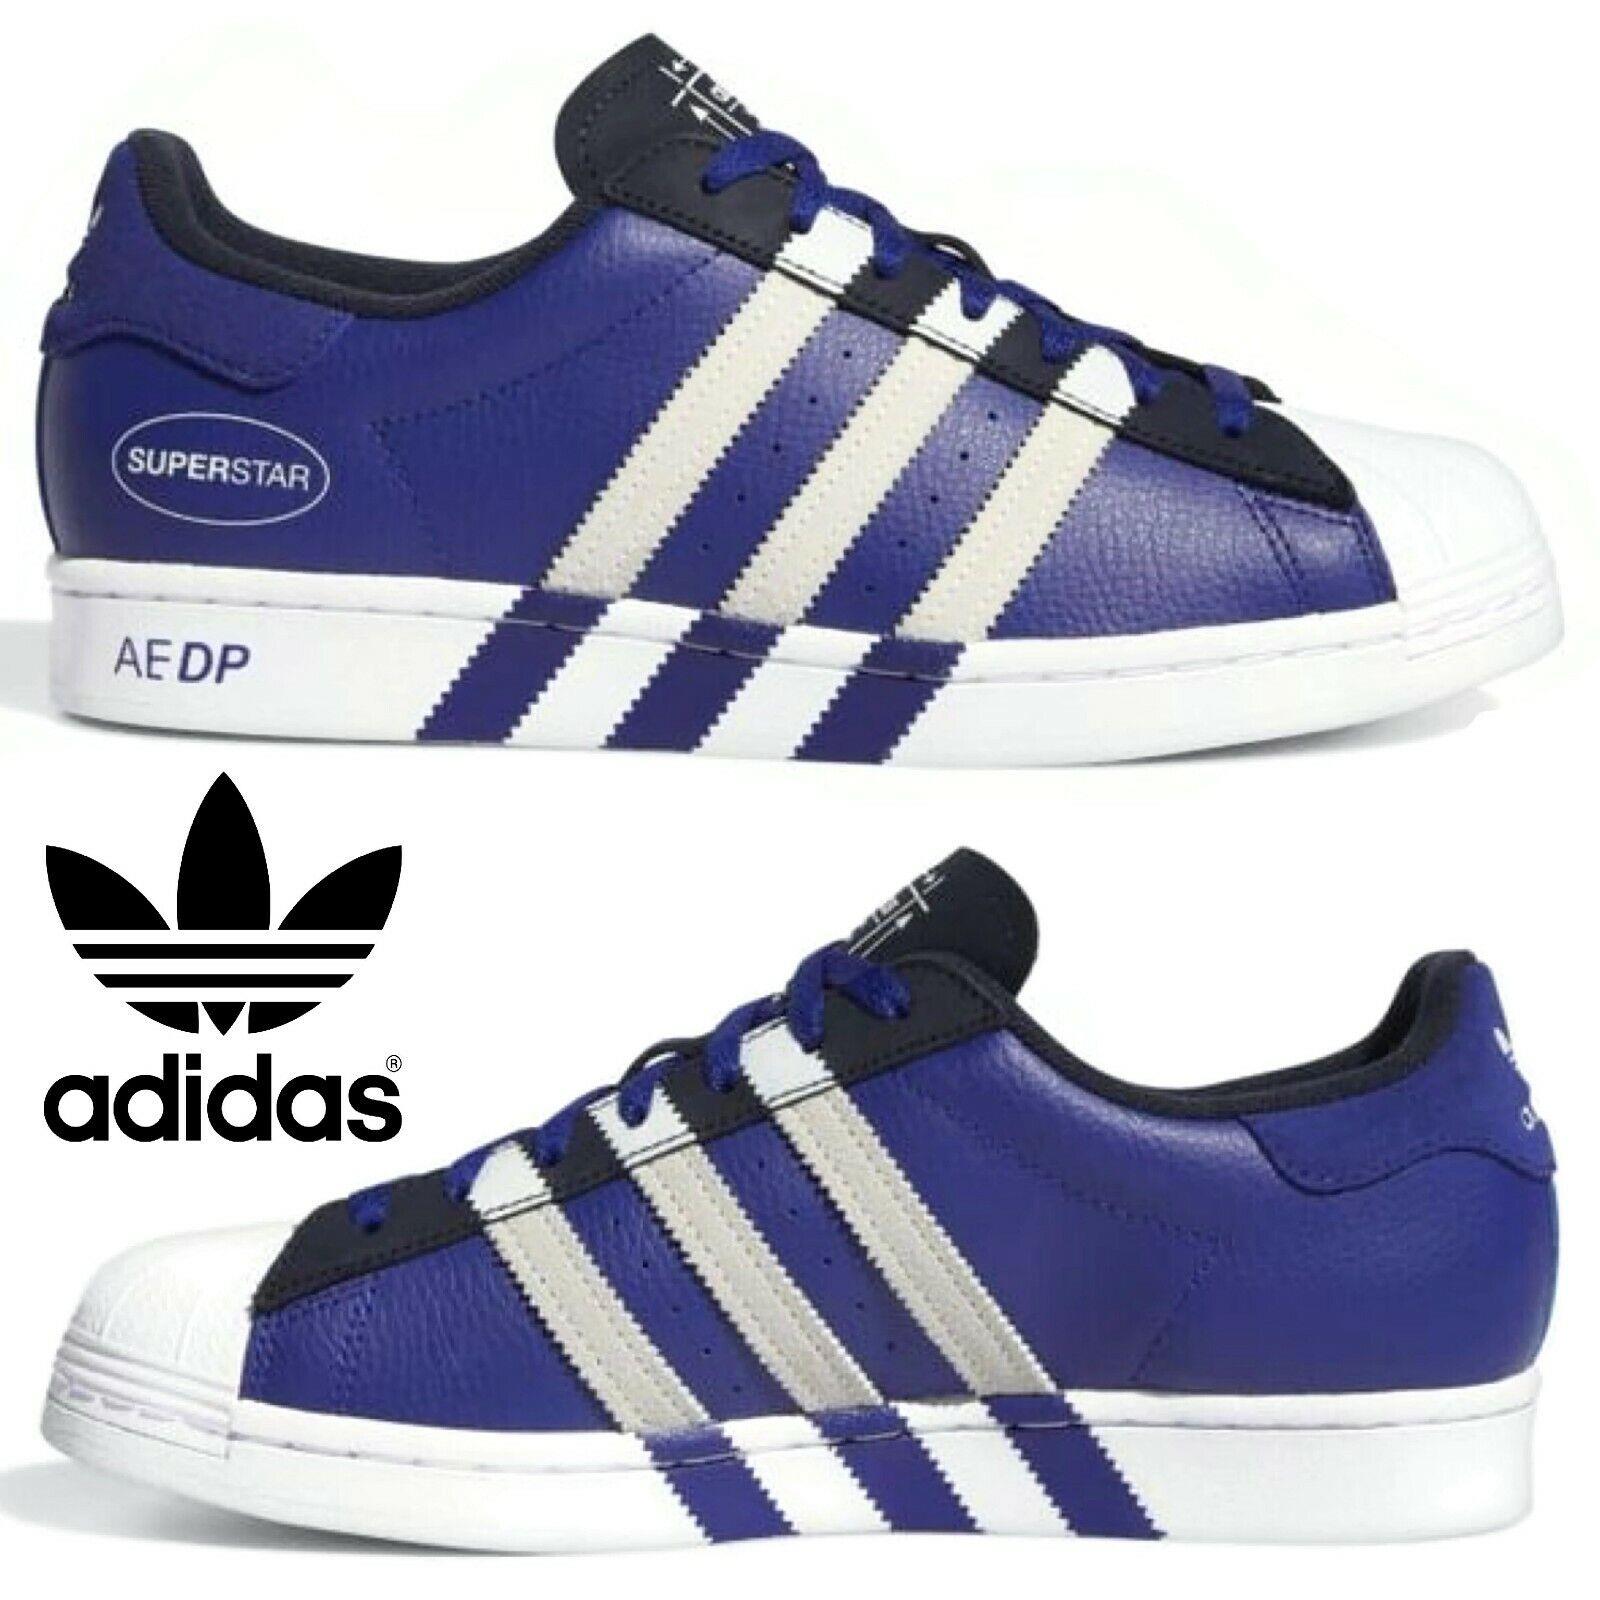 Adidas Originals Superstar Men`s Sneakers Comfort Sport Casual Shoes Blue White